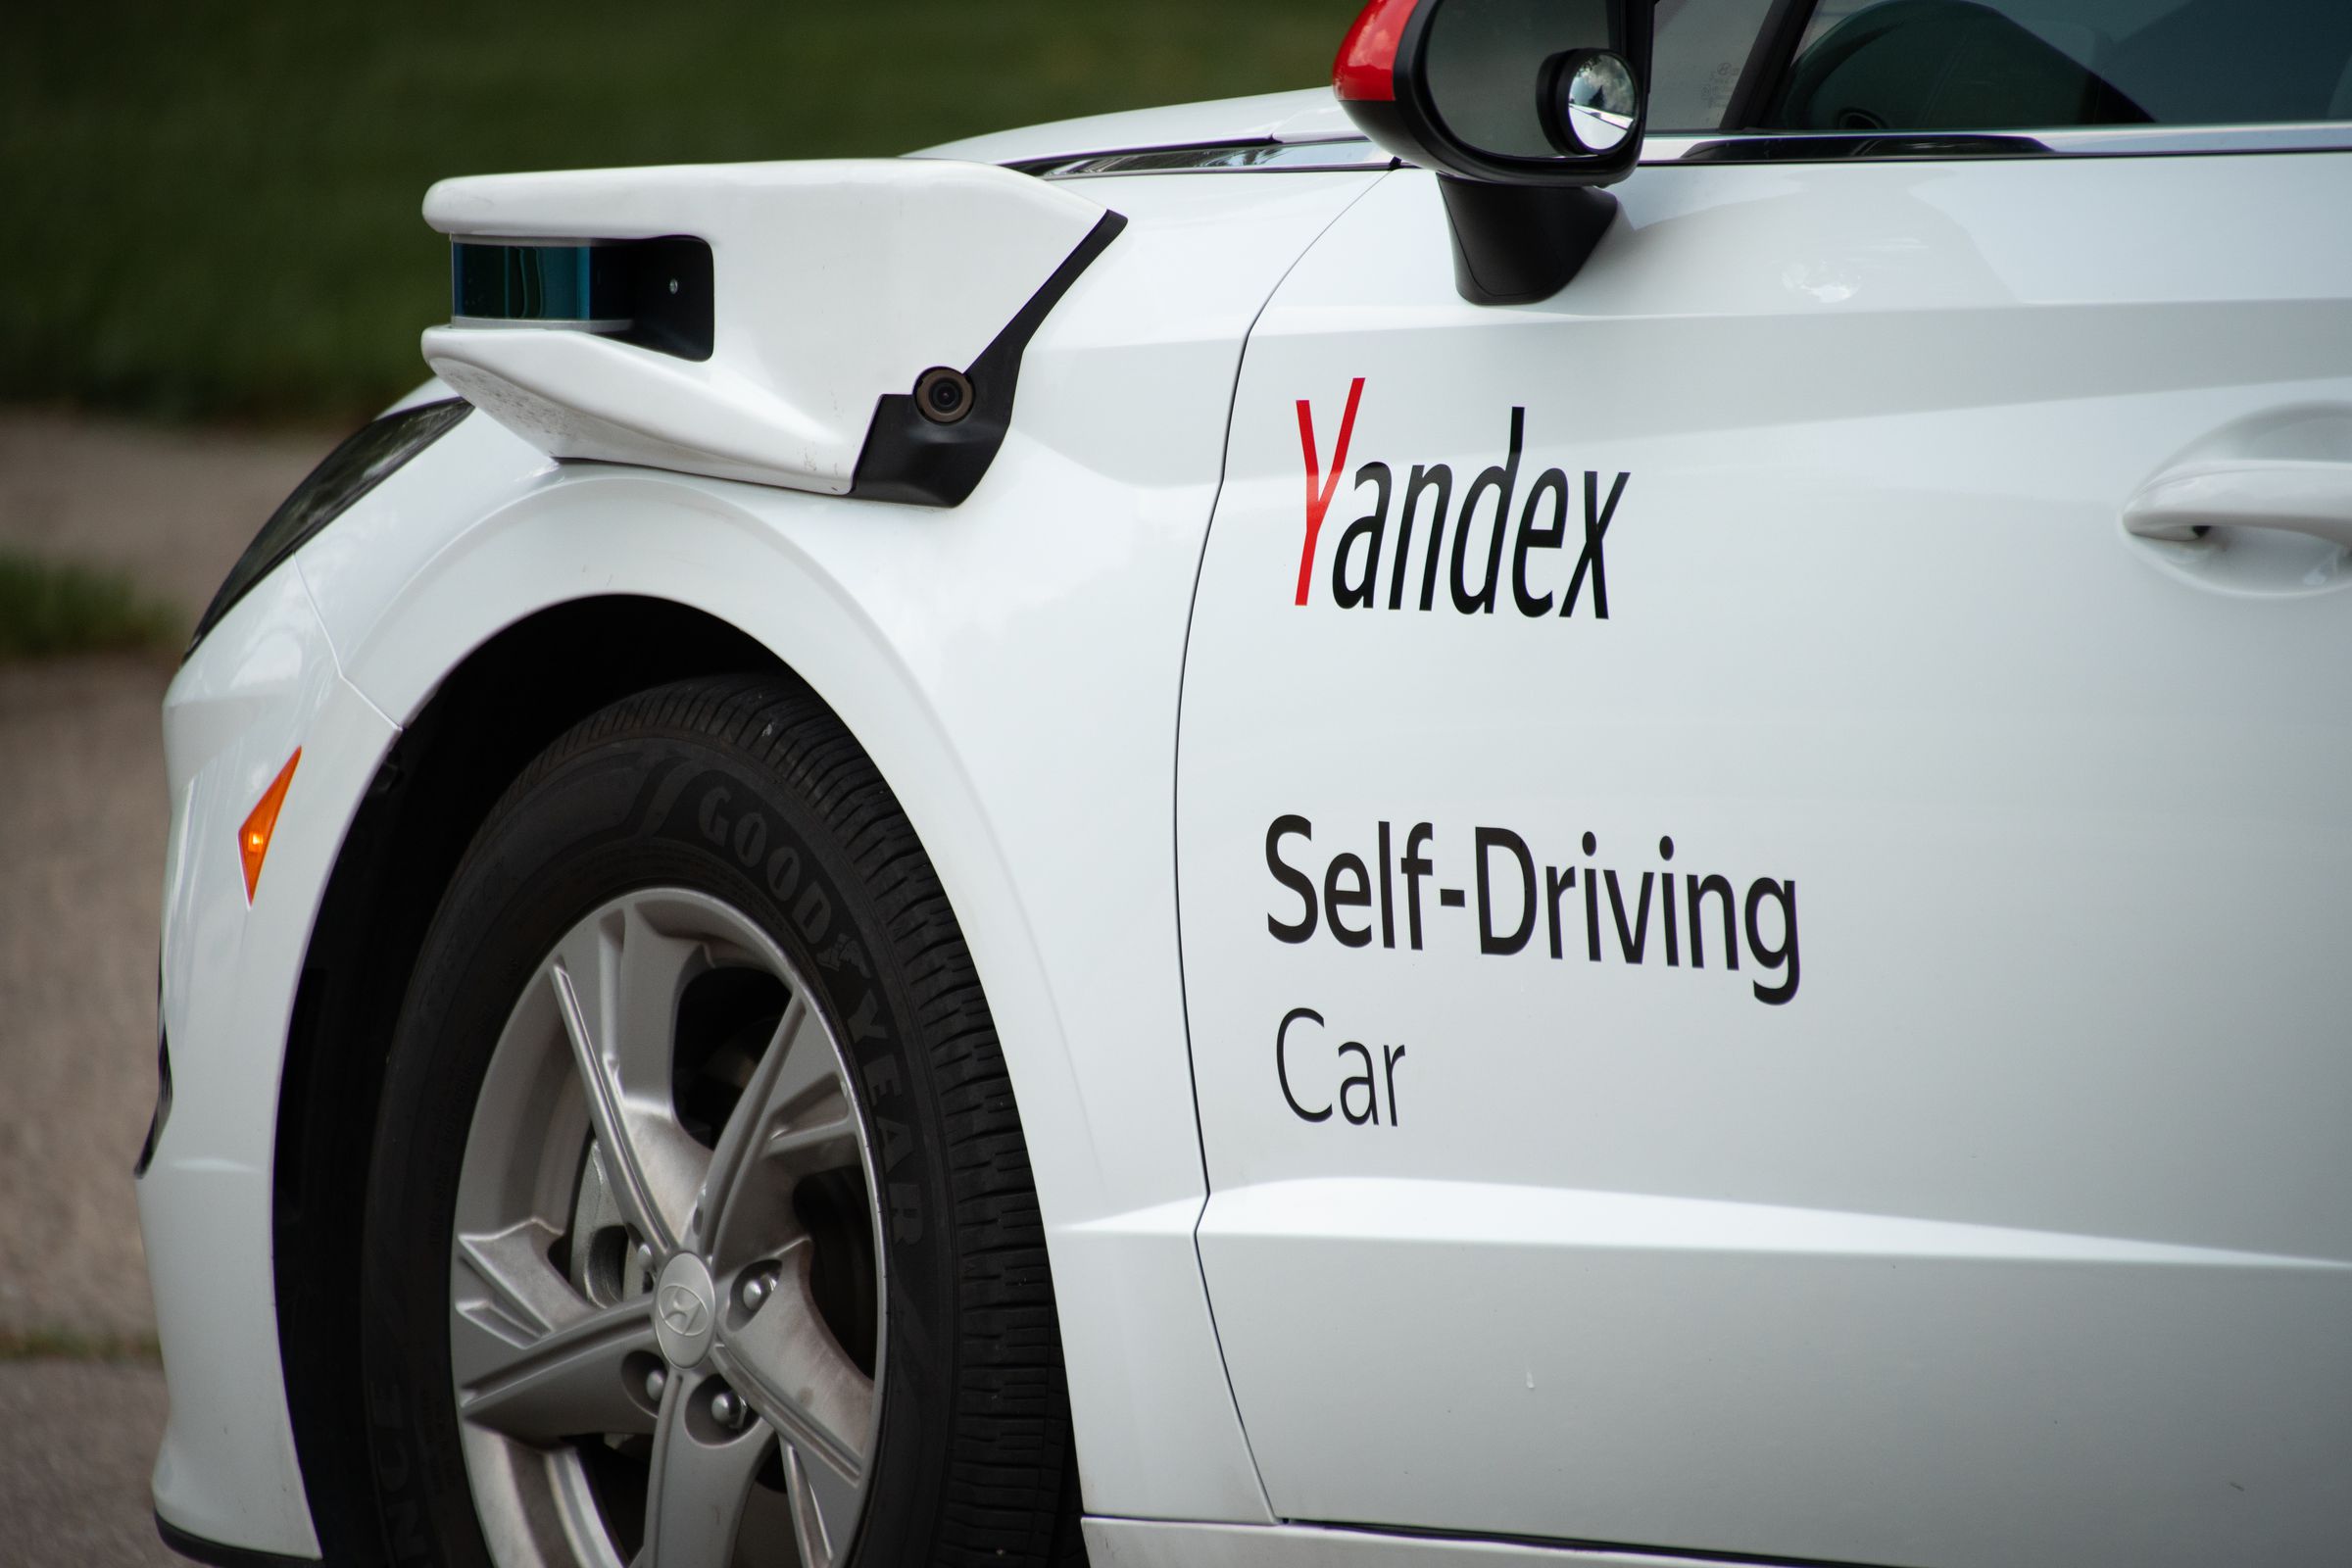 Yandex, a multi-billion dollar tech company based in Russia, had been operating autonomous vehicles in Michigan before the invasion of Ukraine. 